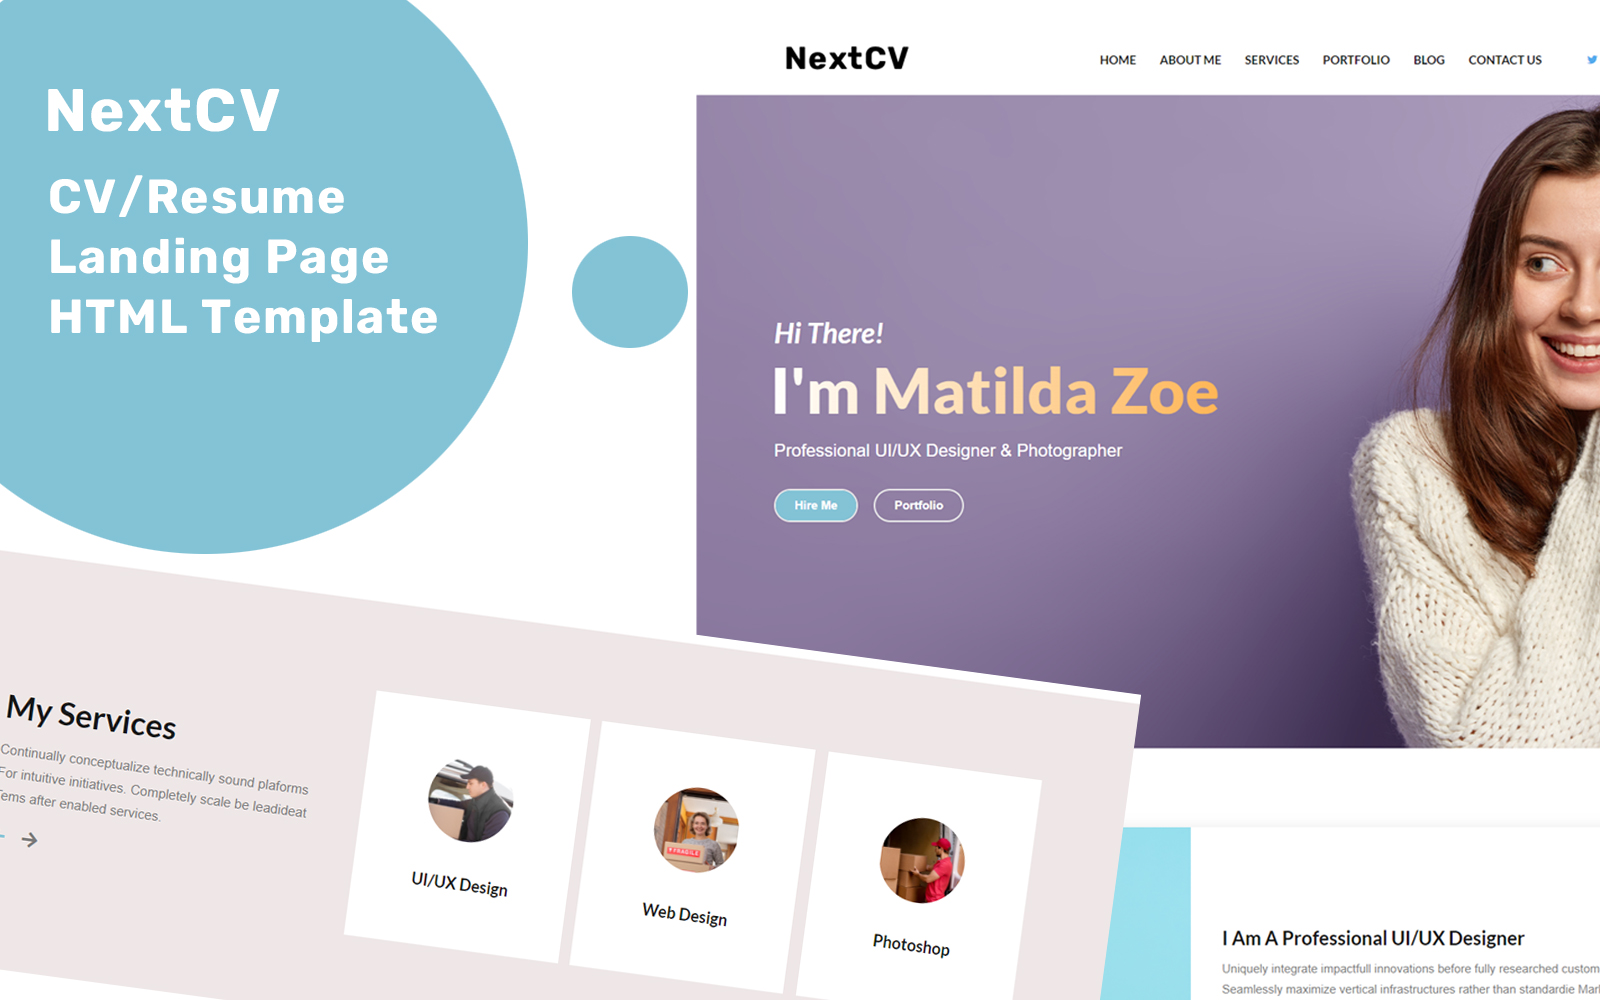 NextCV - CV/Resume Landing Page HTML Template